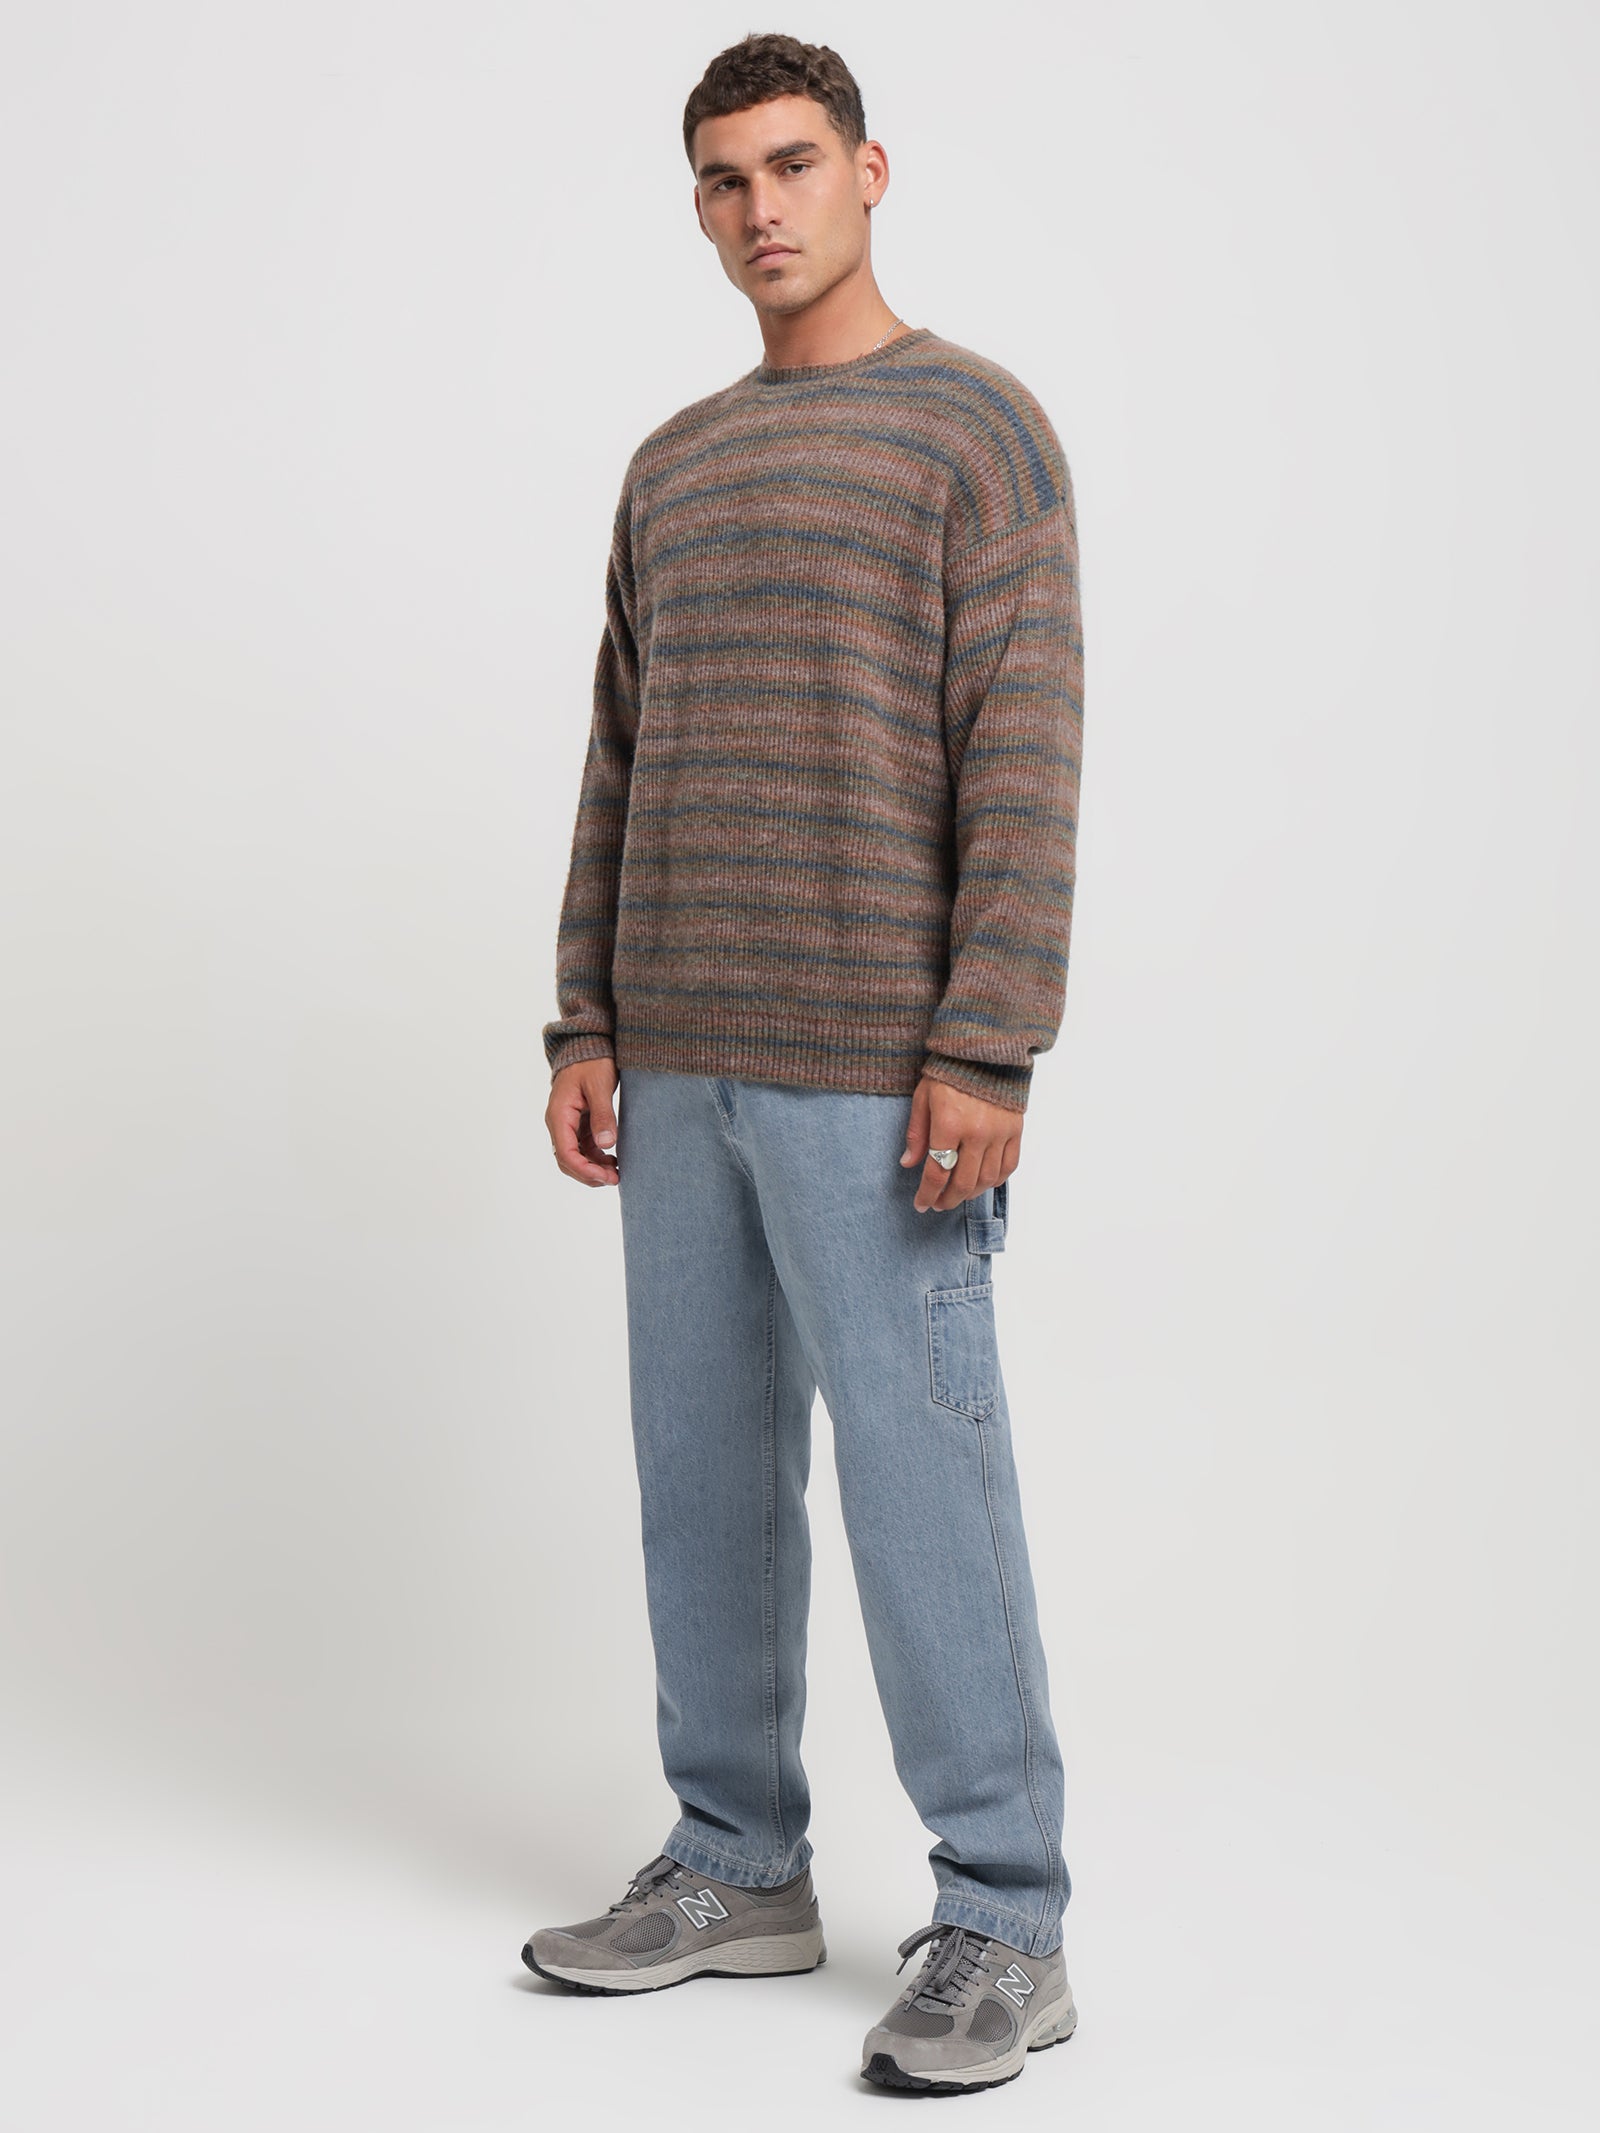 Rampage Knit Sweater in Bown & Blue Stripes